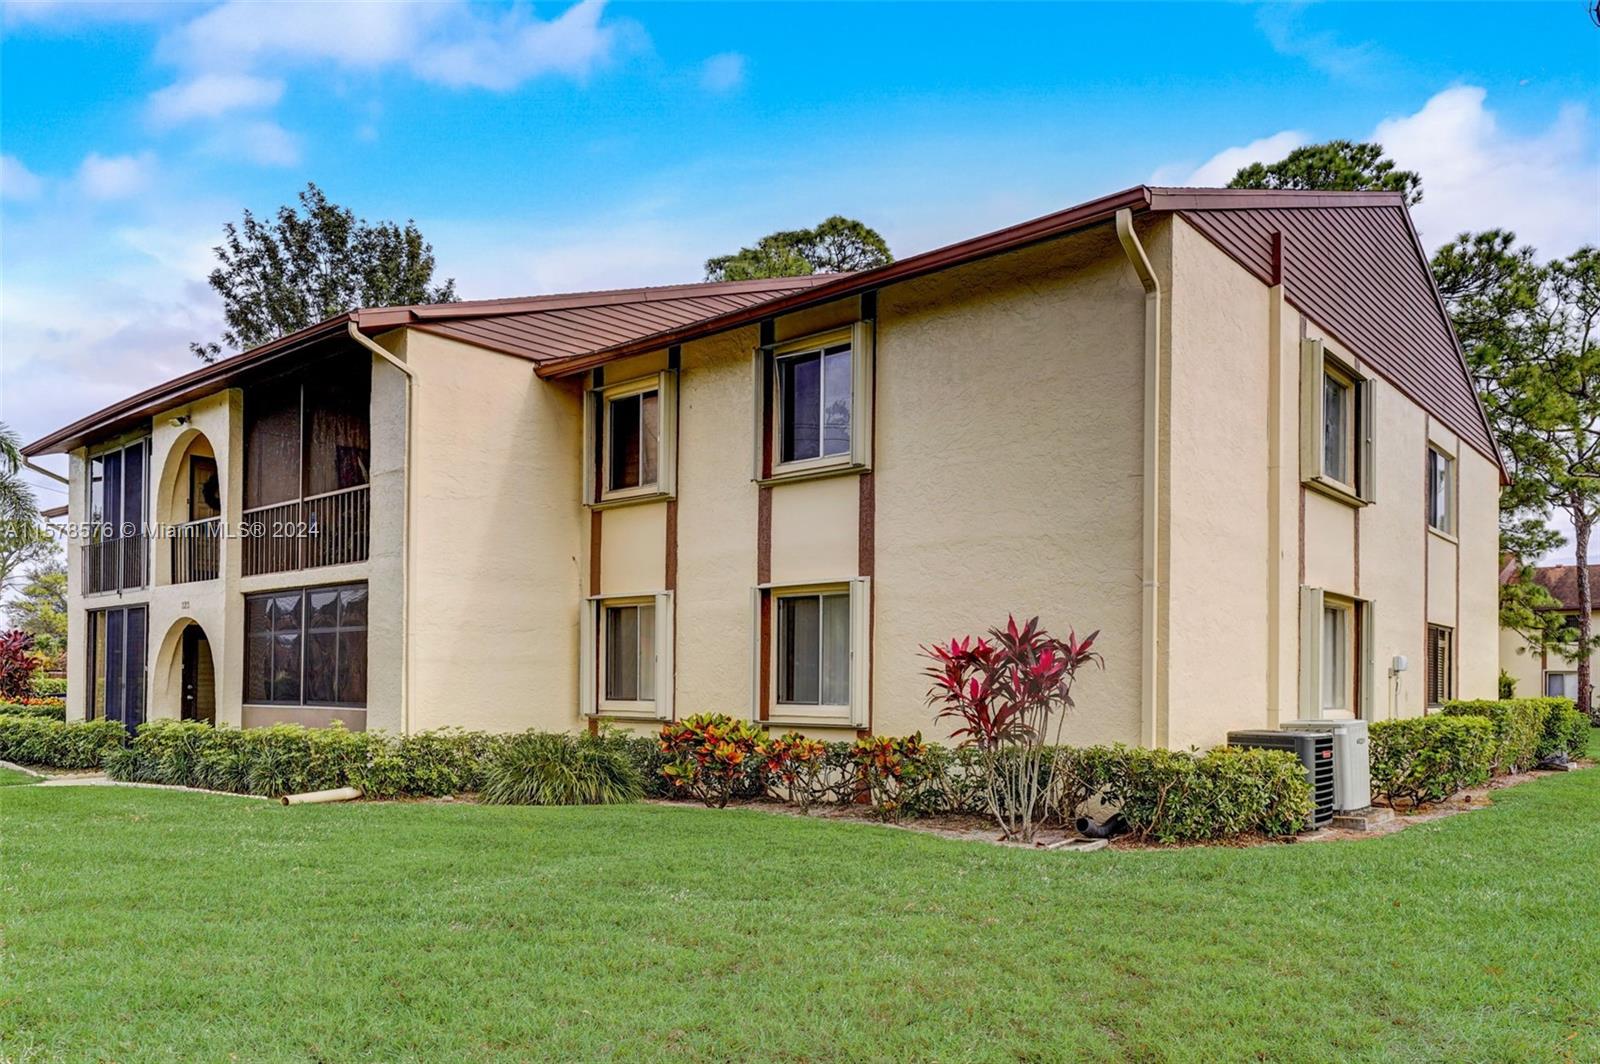 Rental Property at 323 Knotty Pine Cir Cir D-1, Green Acres, Palm Beach County, Florida - Bedrooms: 2 
Bathrooms: 2  - $1,850 MO.